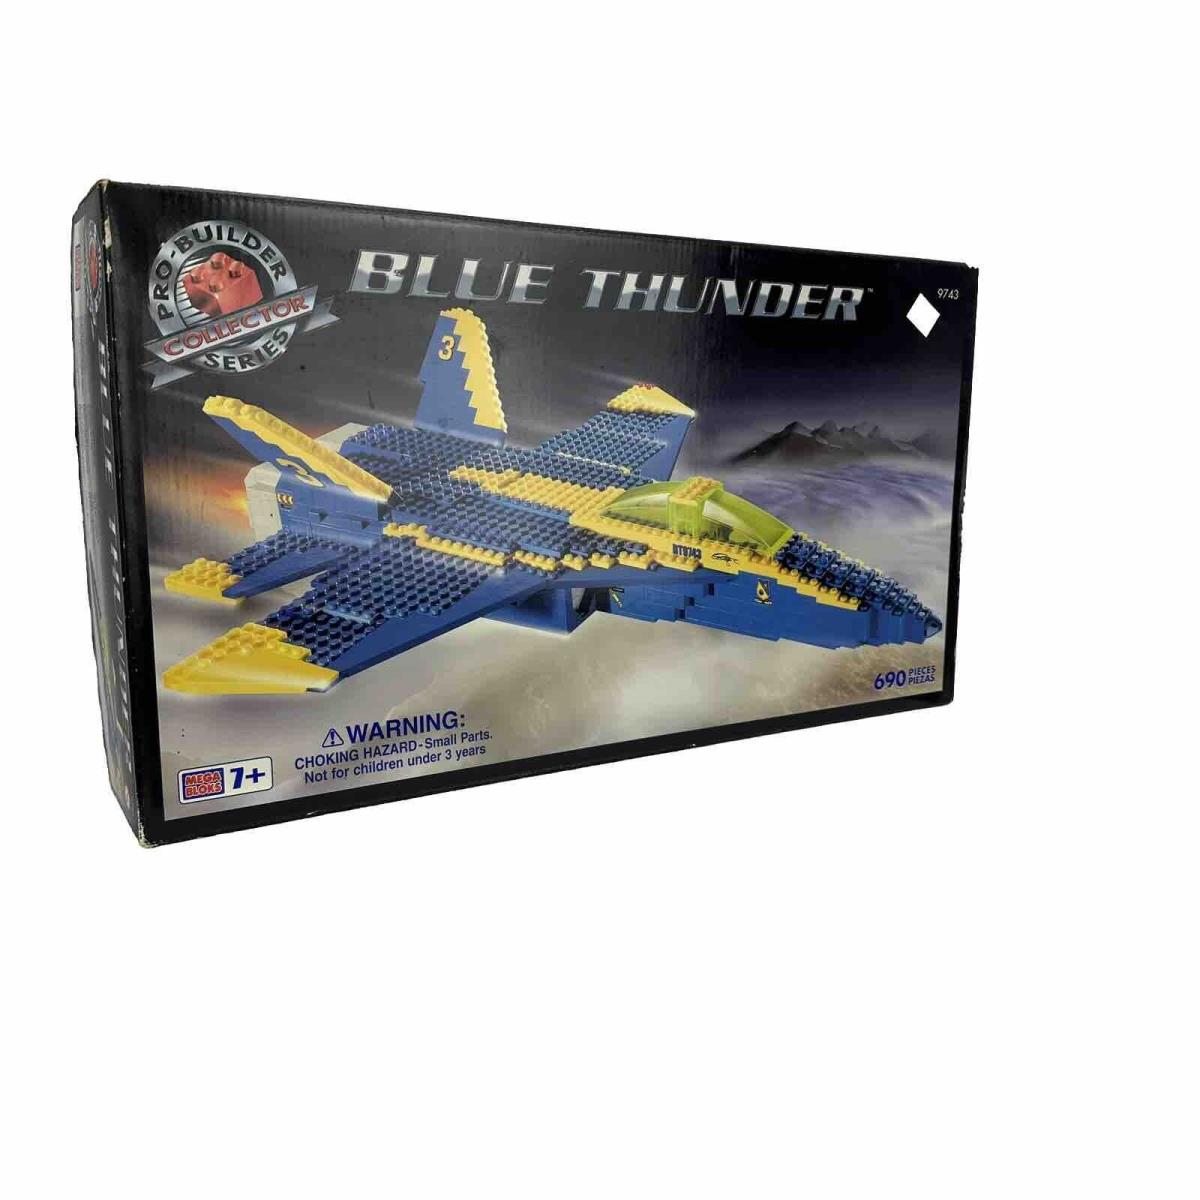 Mega Bloks Probuilder Blue Thunder 9743 Airplane 690 Pieces